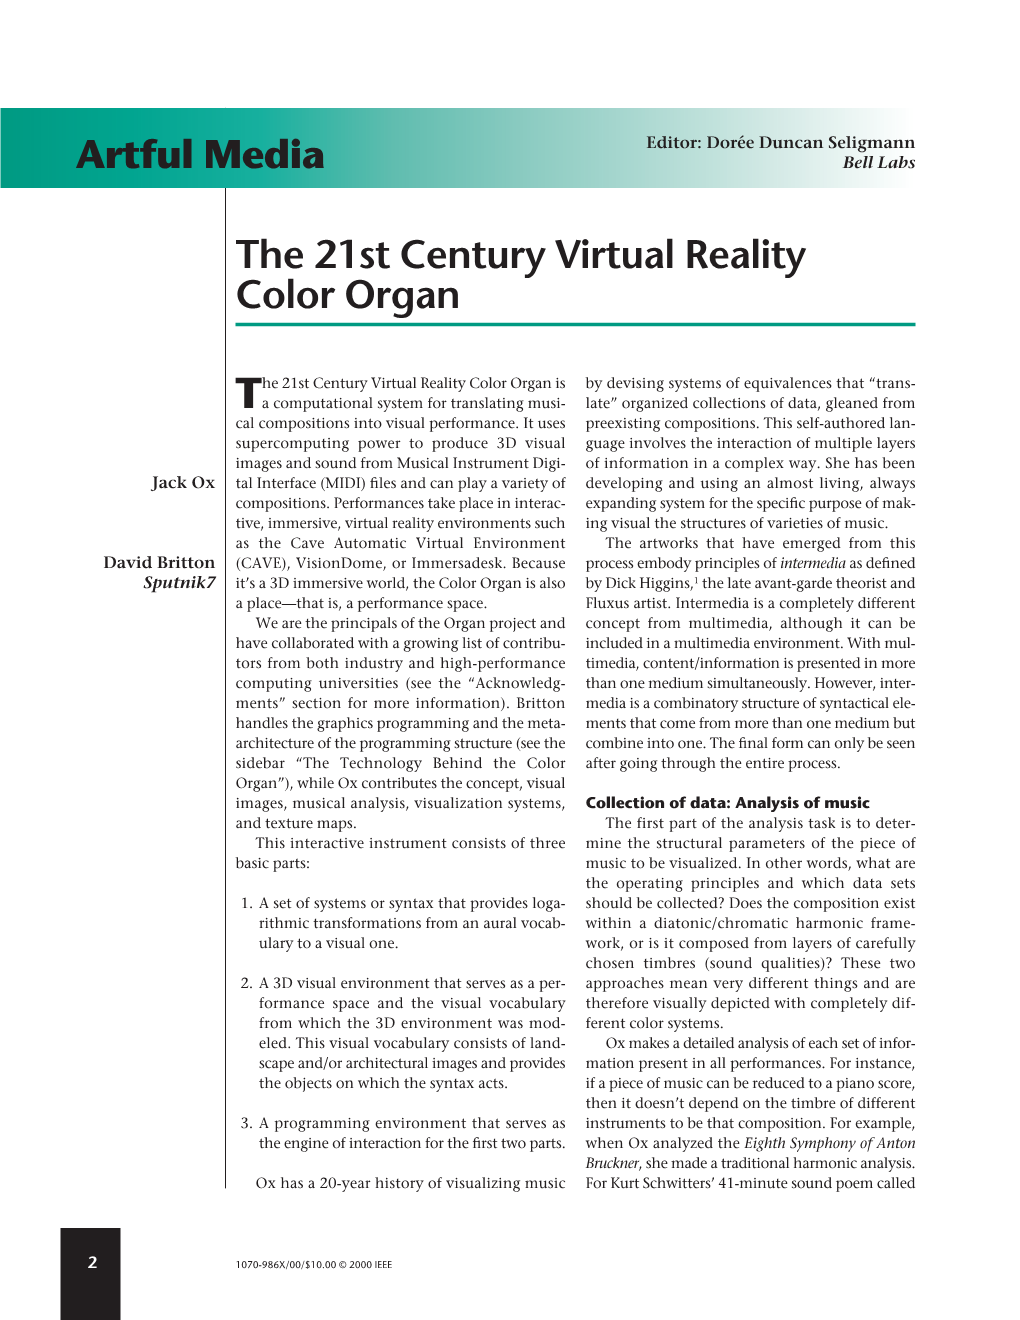 Artful Media the 21St Century Virtual Reality Color Organ